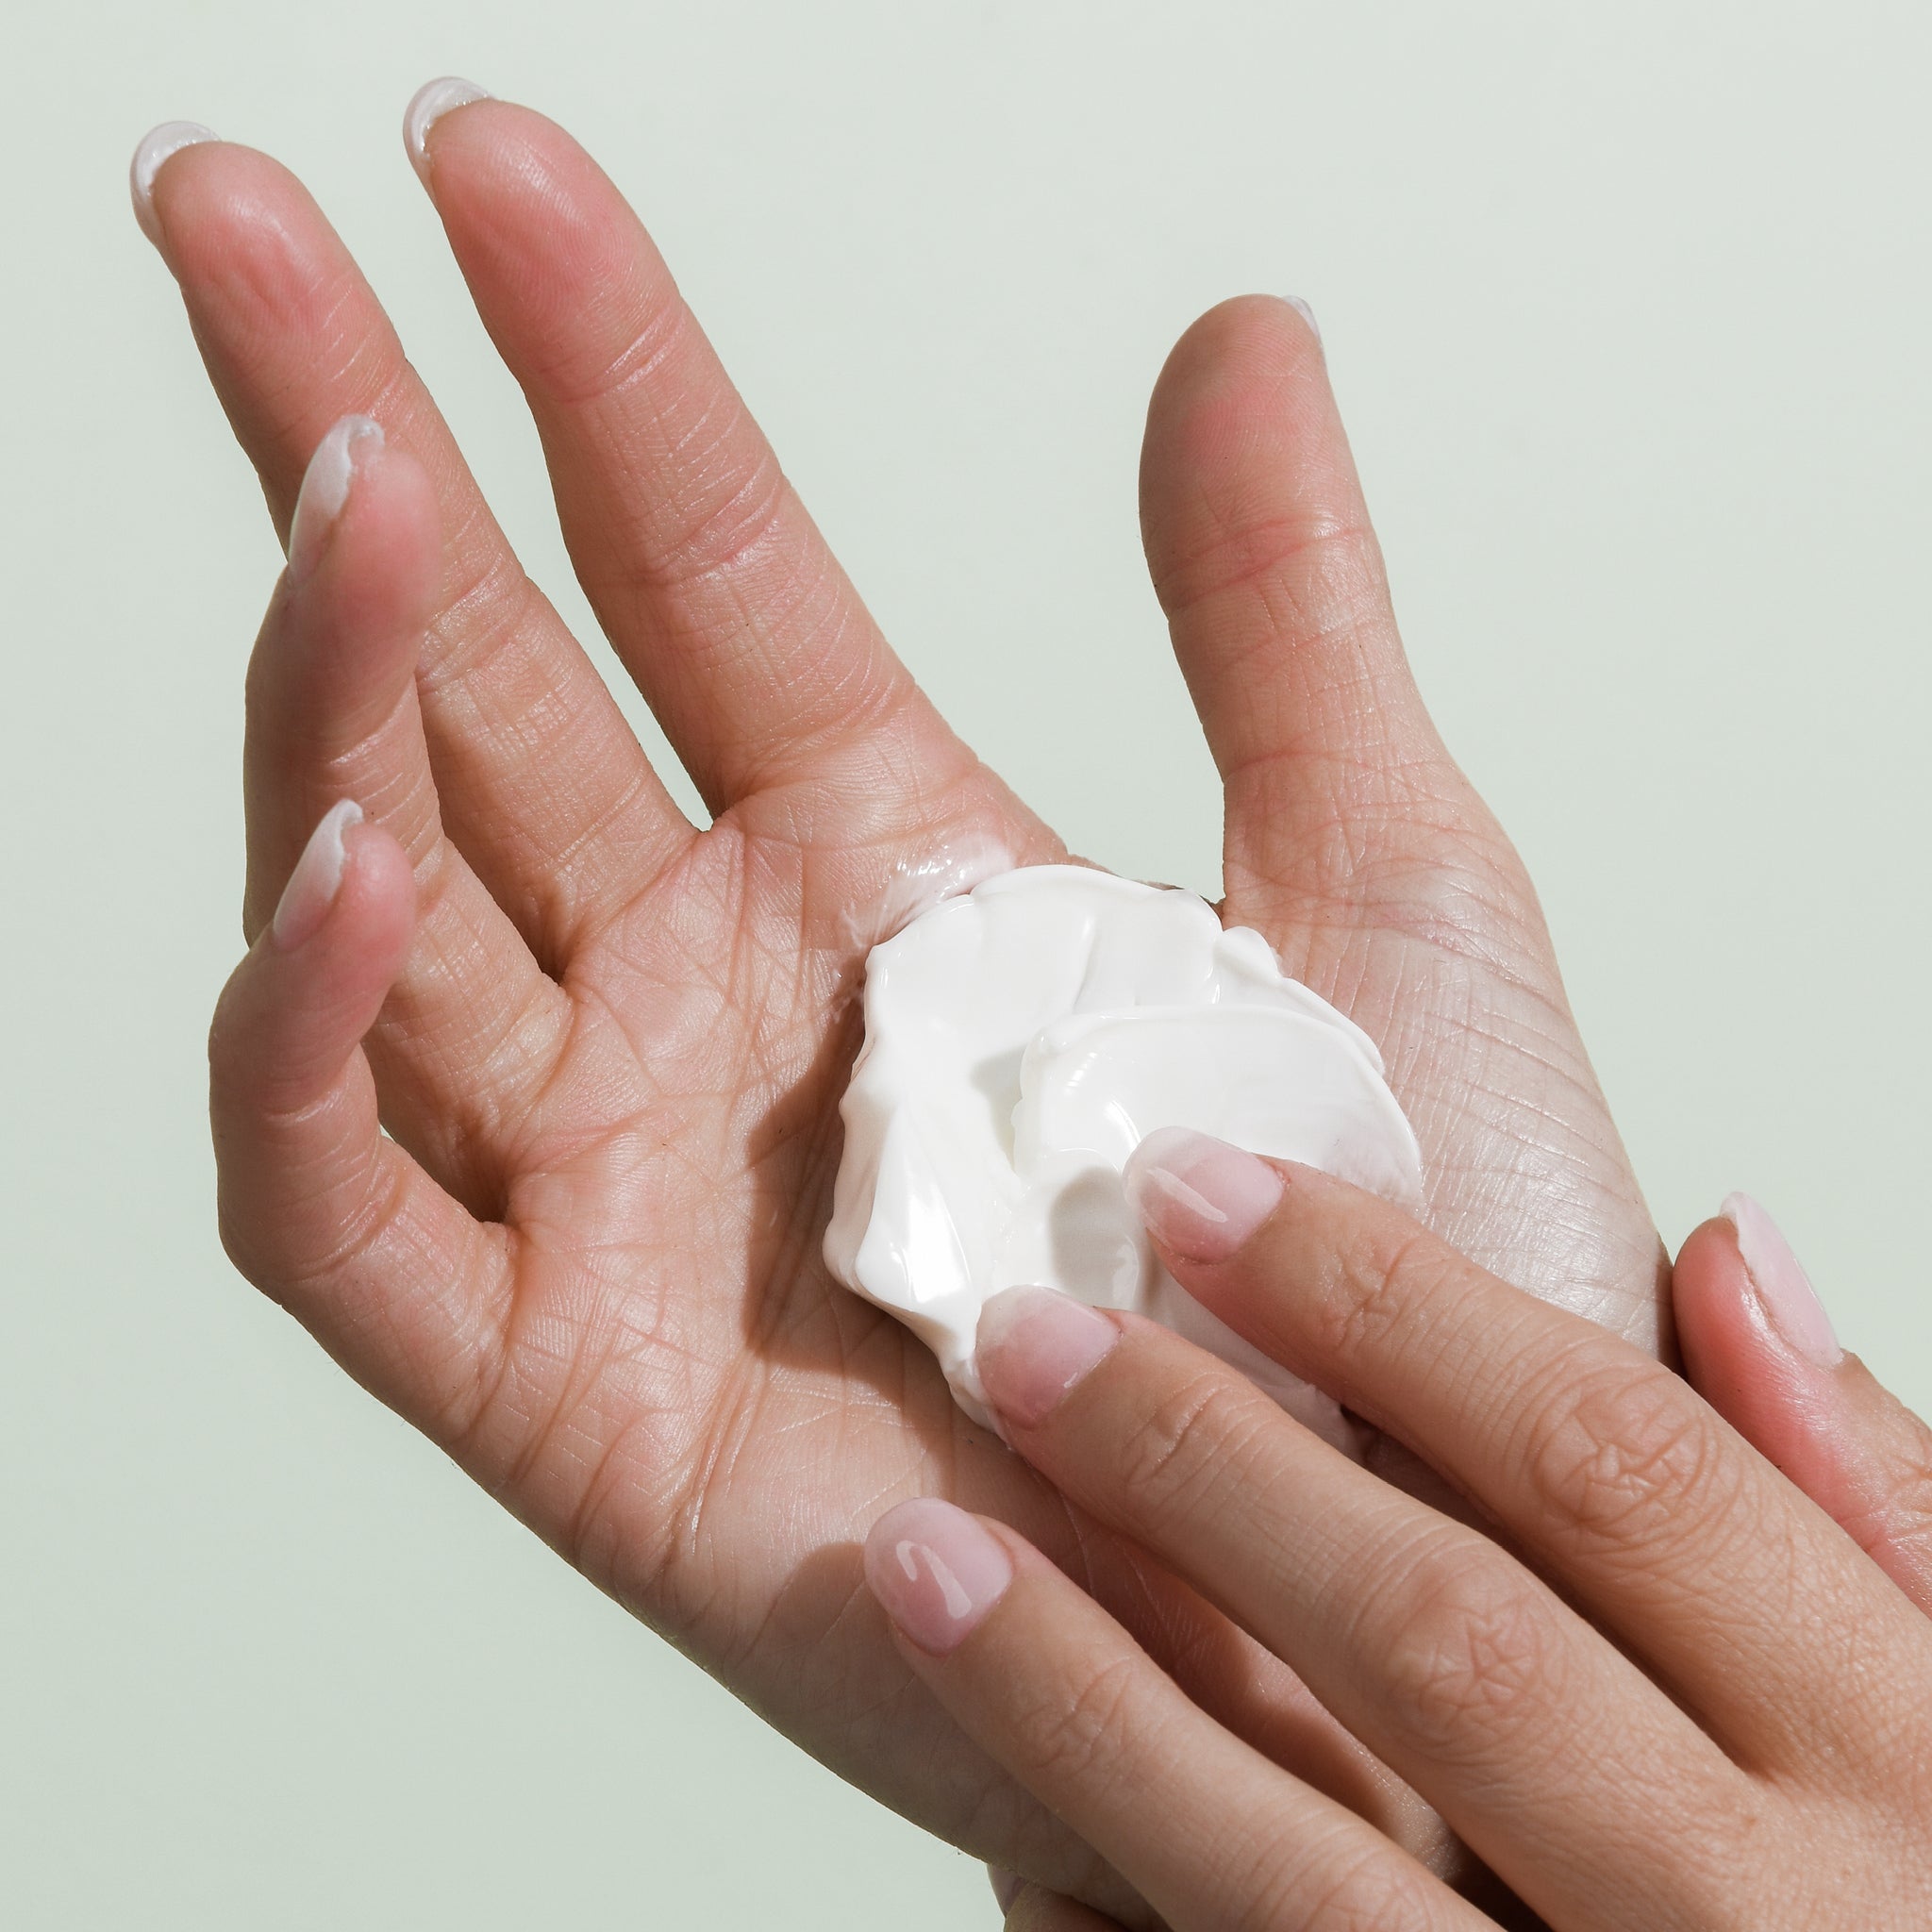 Hand rubbing Alivio Wellness day cream showing texture